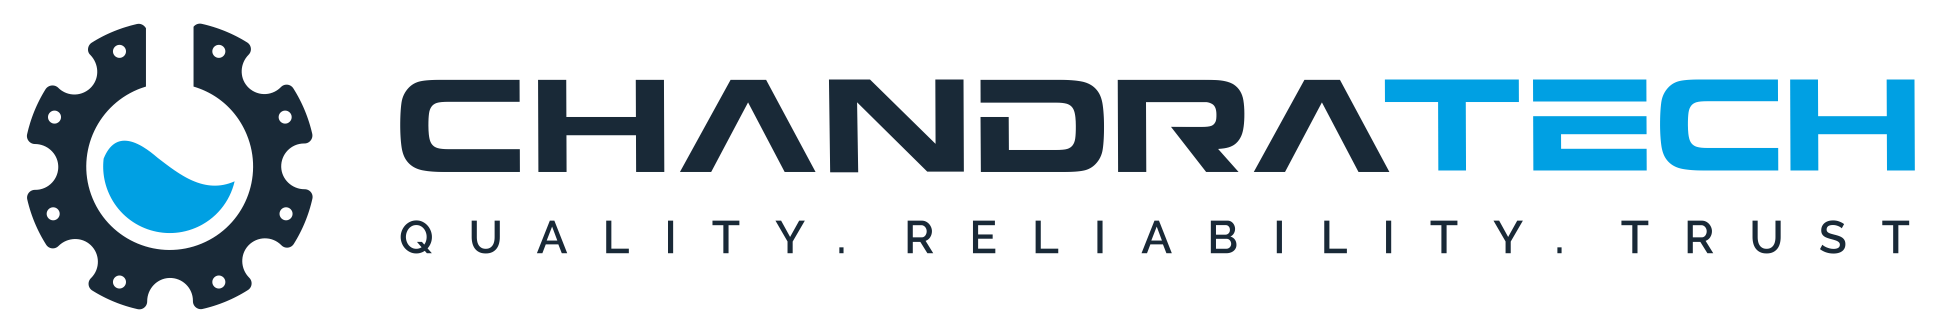 ChandraTech logo